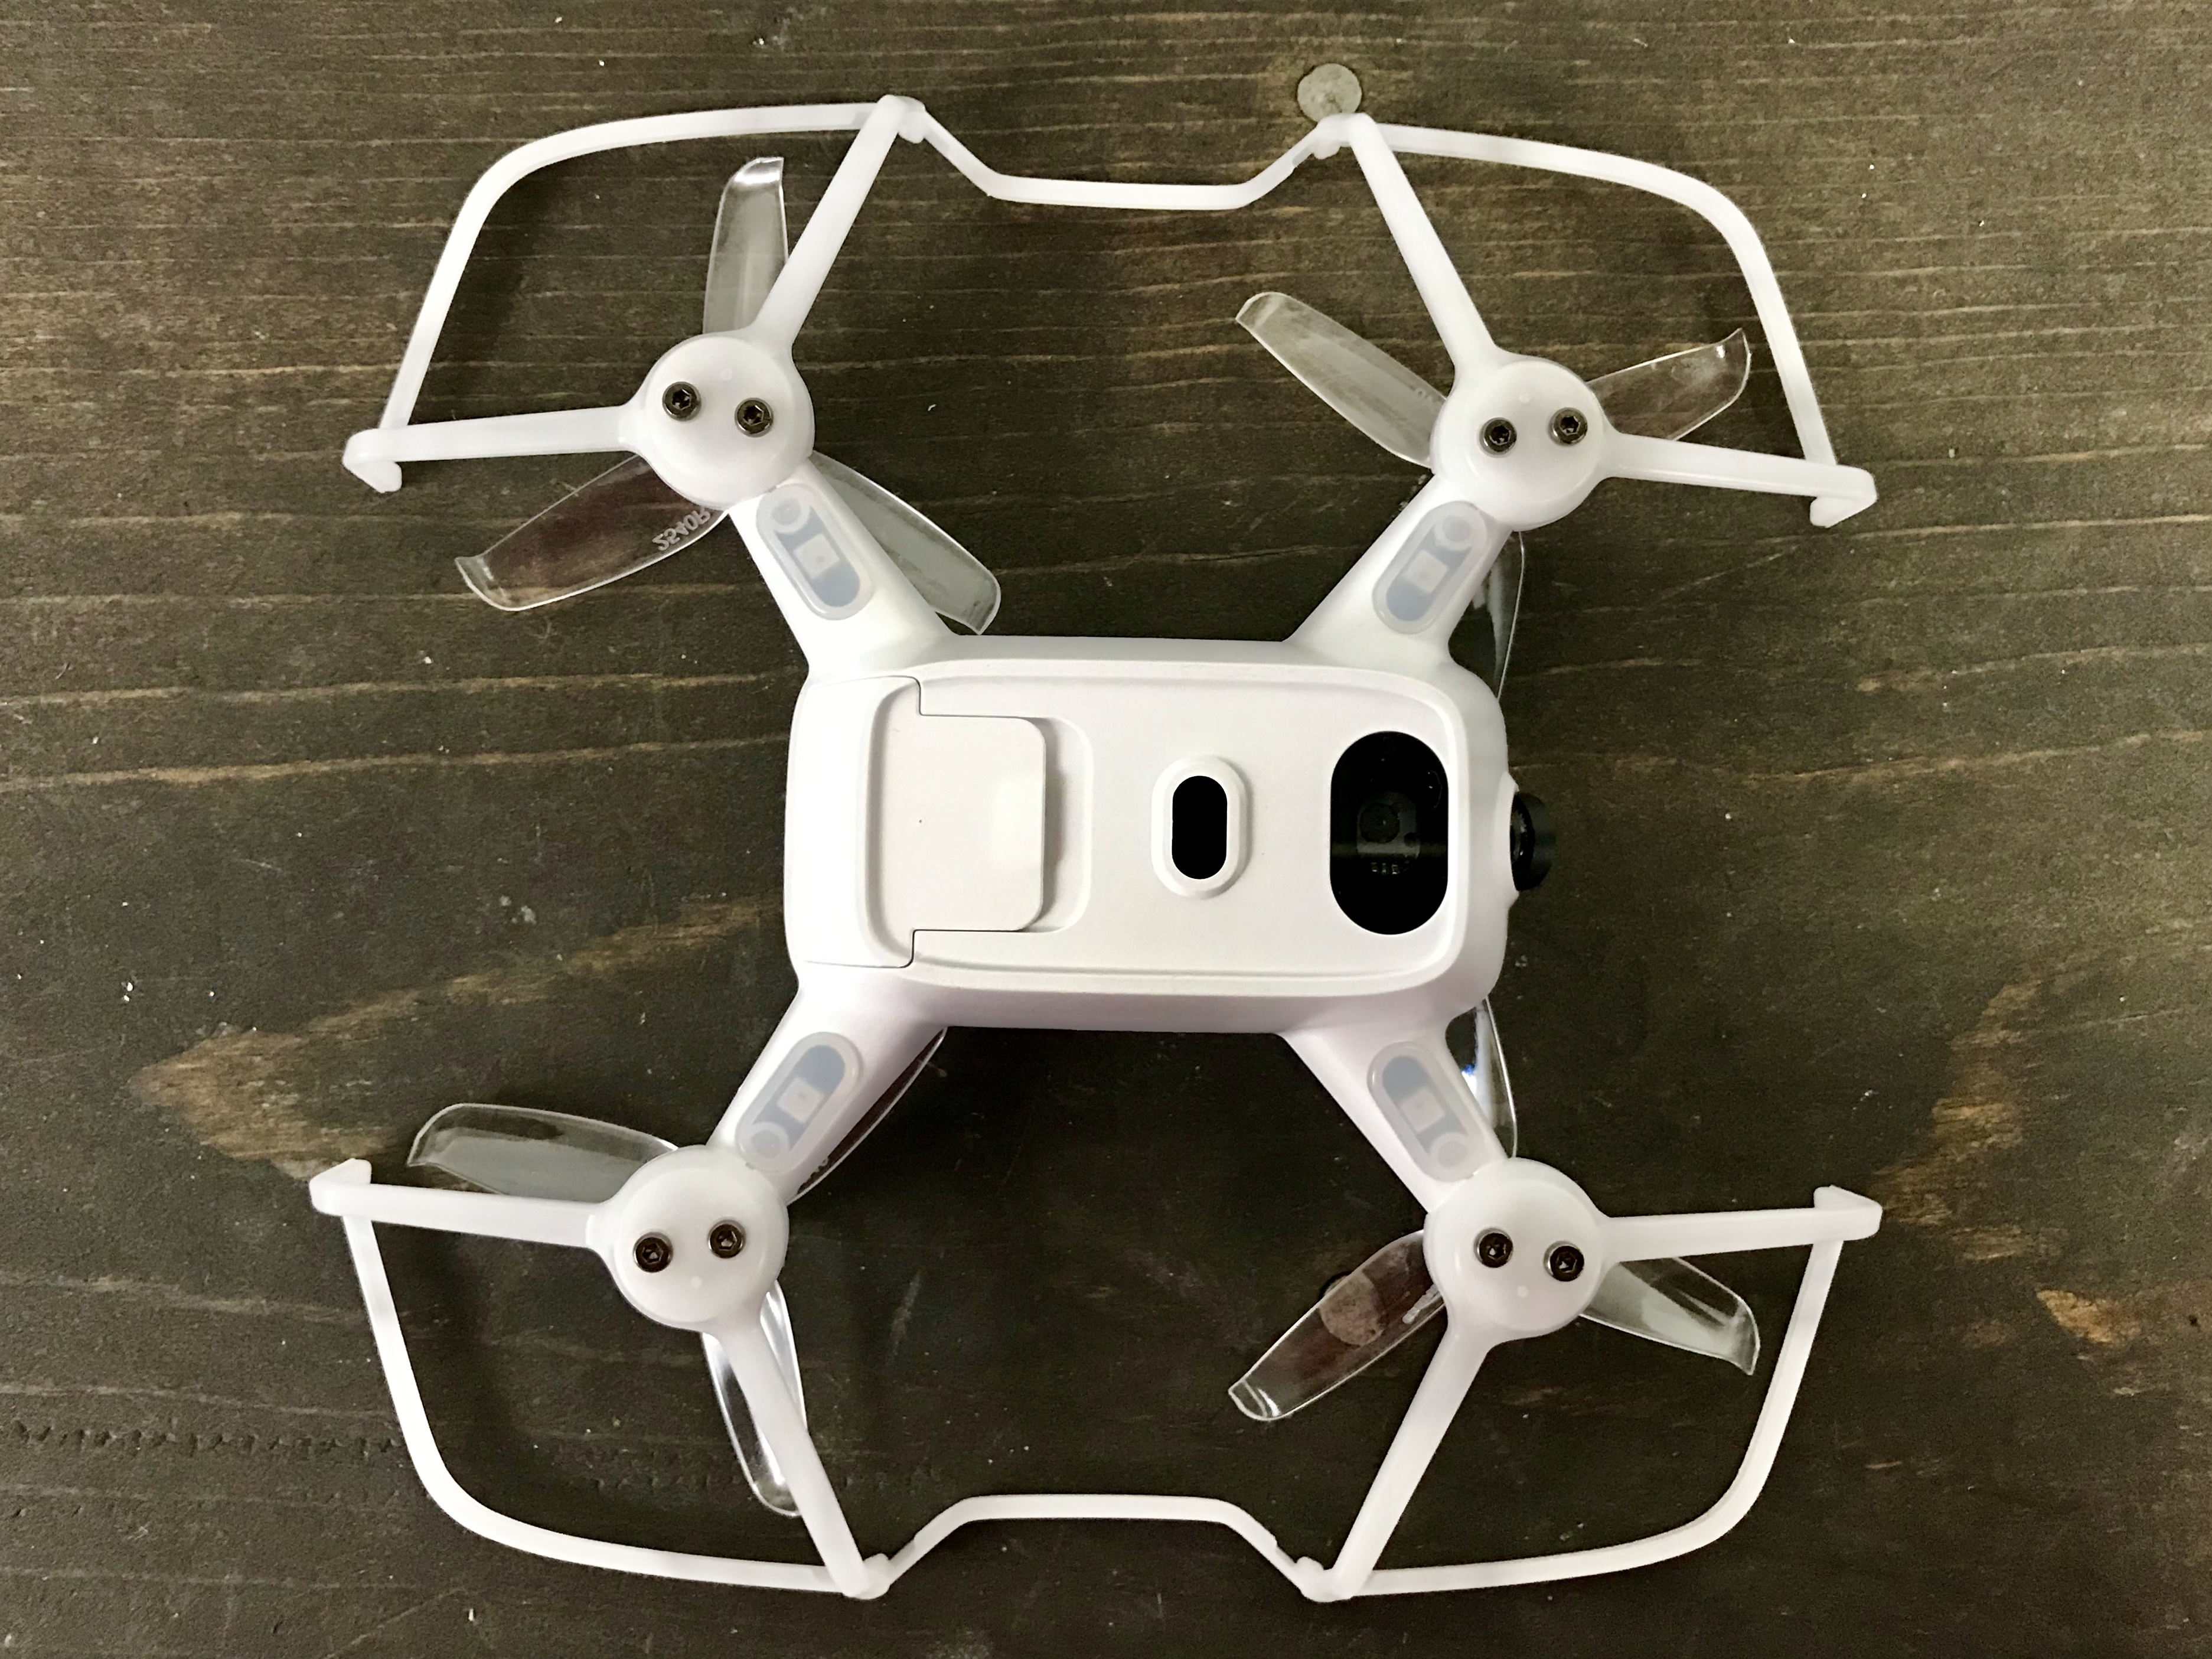 oori drone